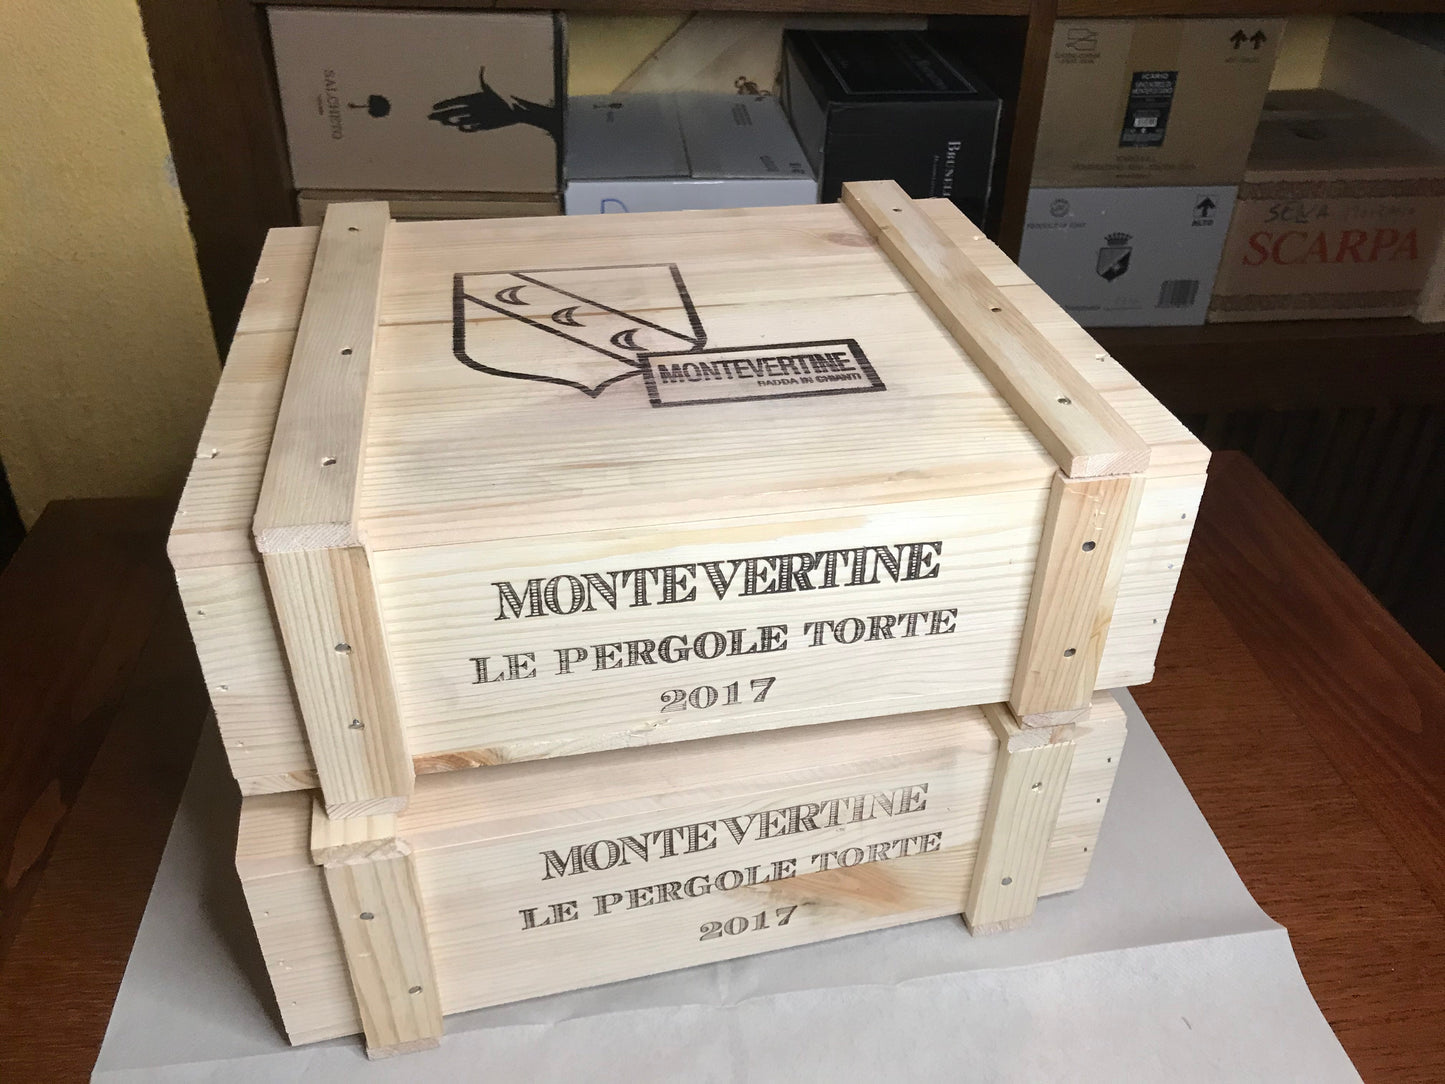 Montevertine Le Pergole Torte Igt 2017 3bts OWC